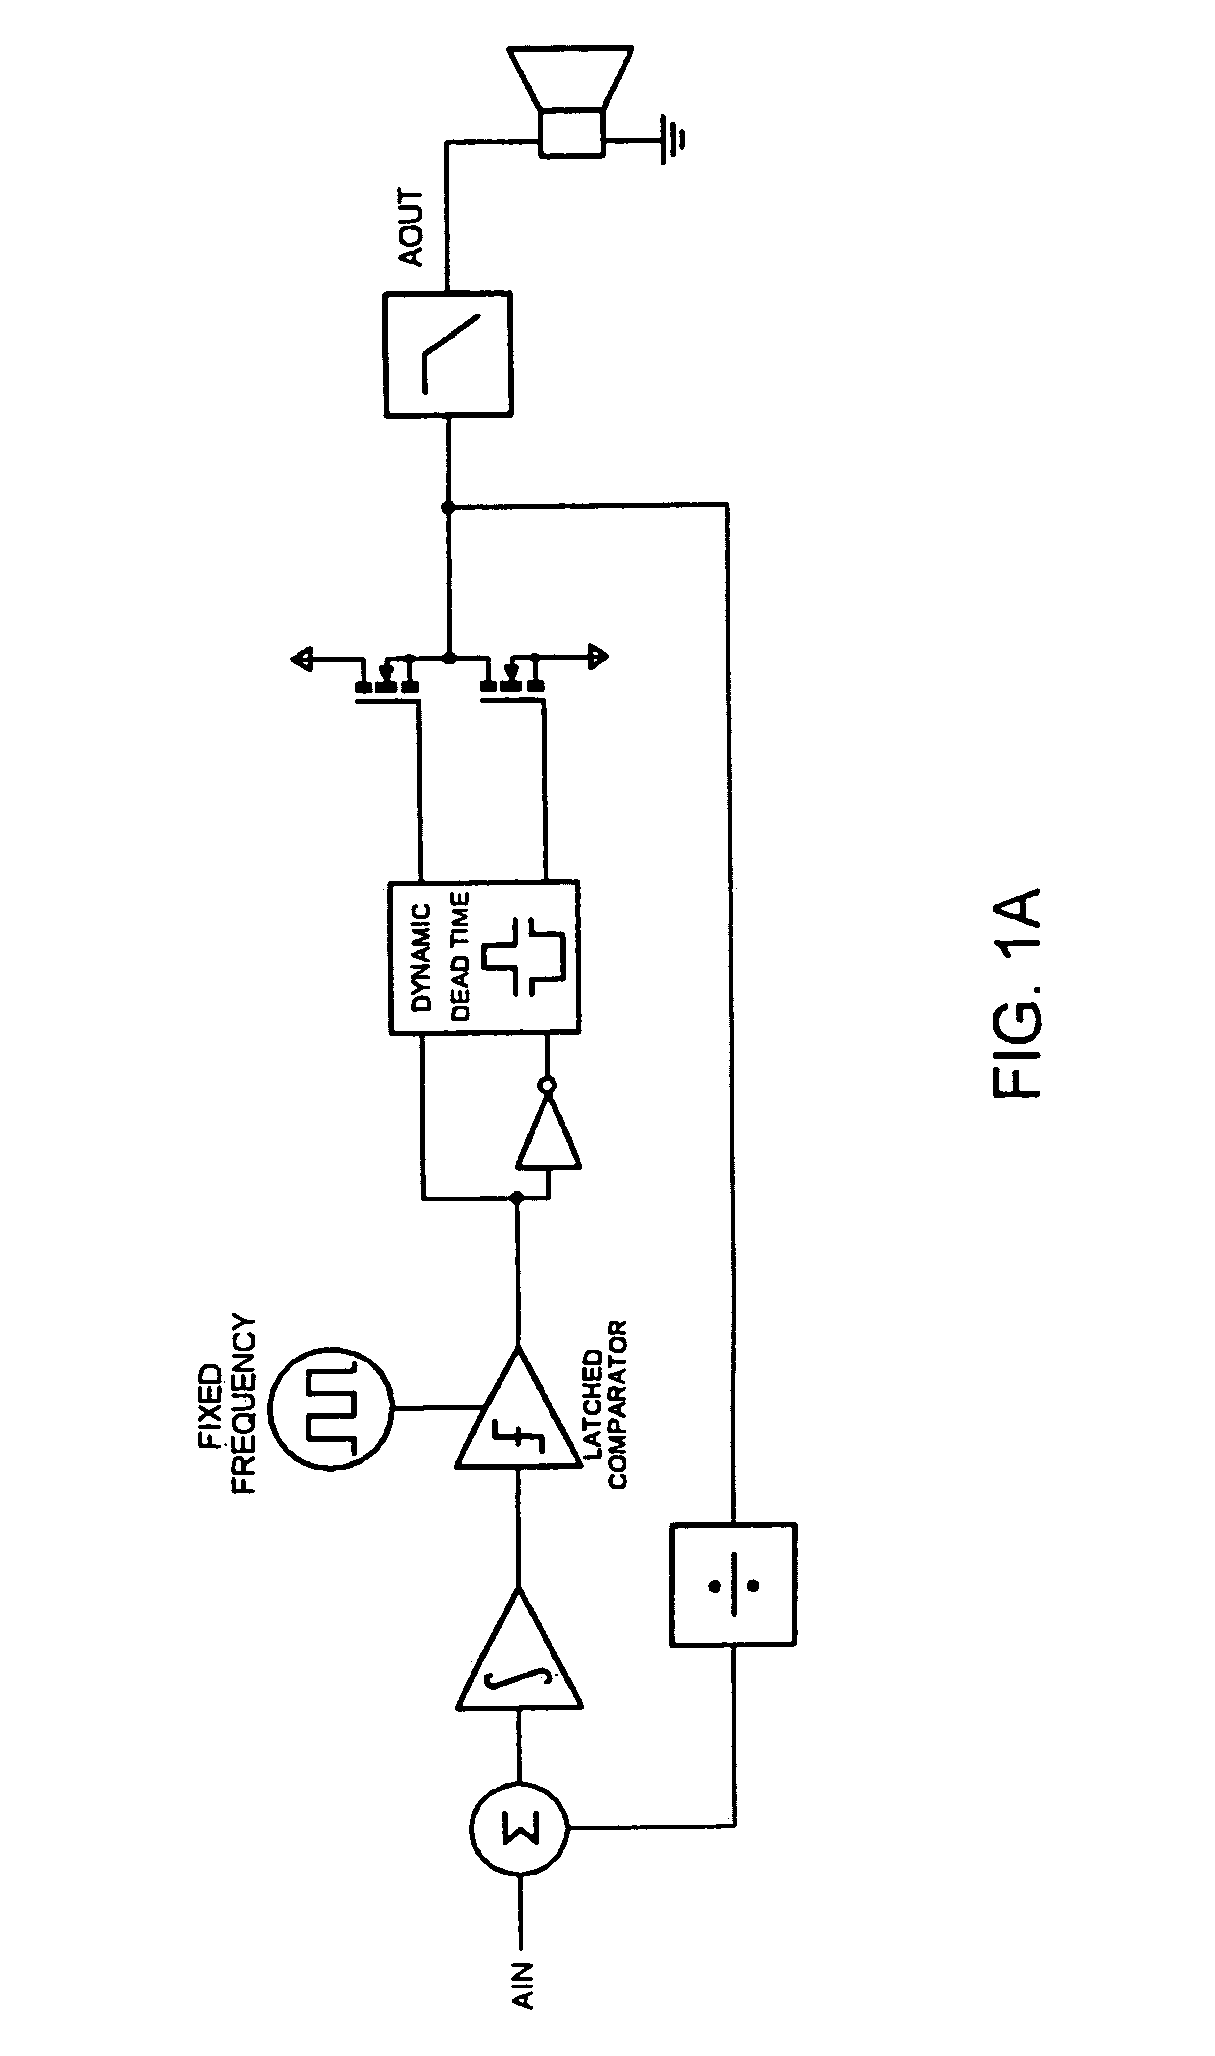 Sigma-delta modulated amplifier